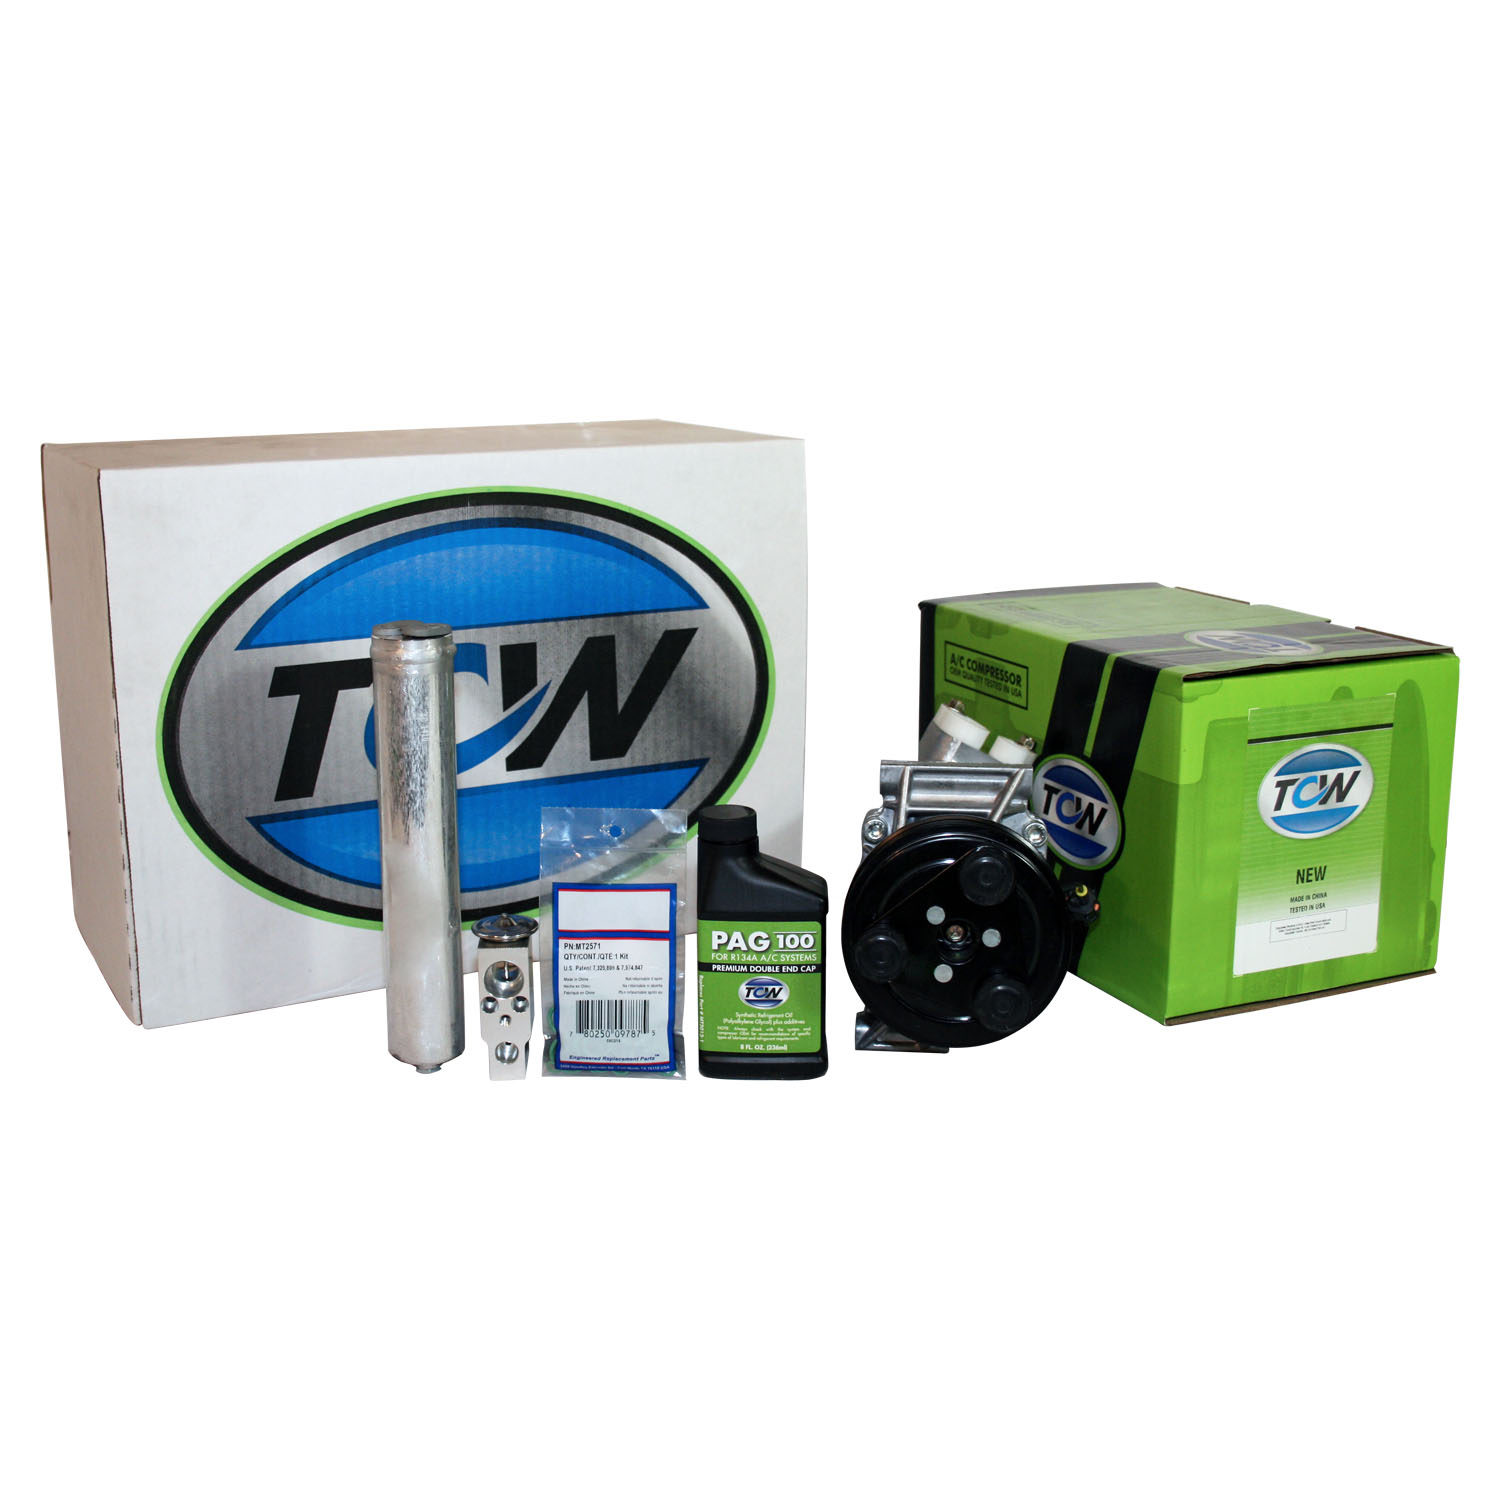 TCW Vehicle A/C Kit K1000384N New Product Image field_60b6a13a6e67c